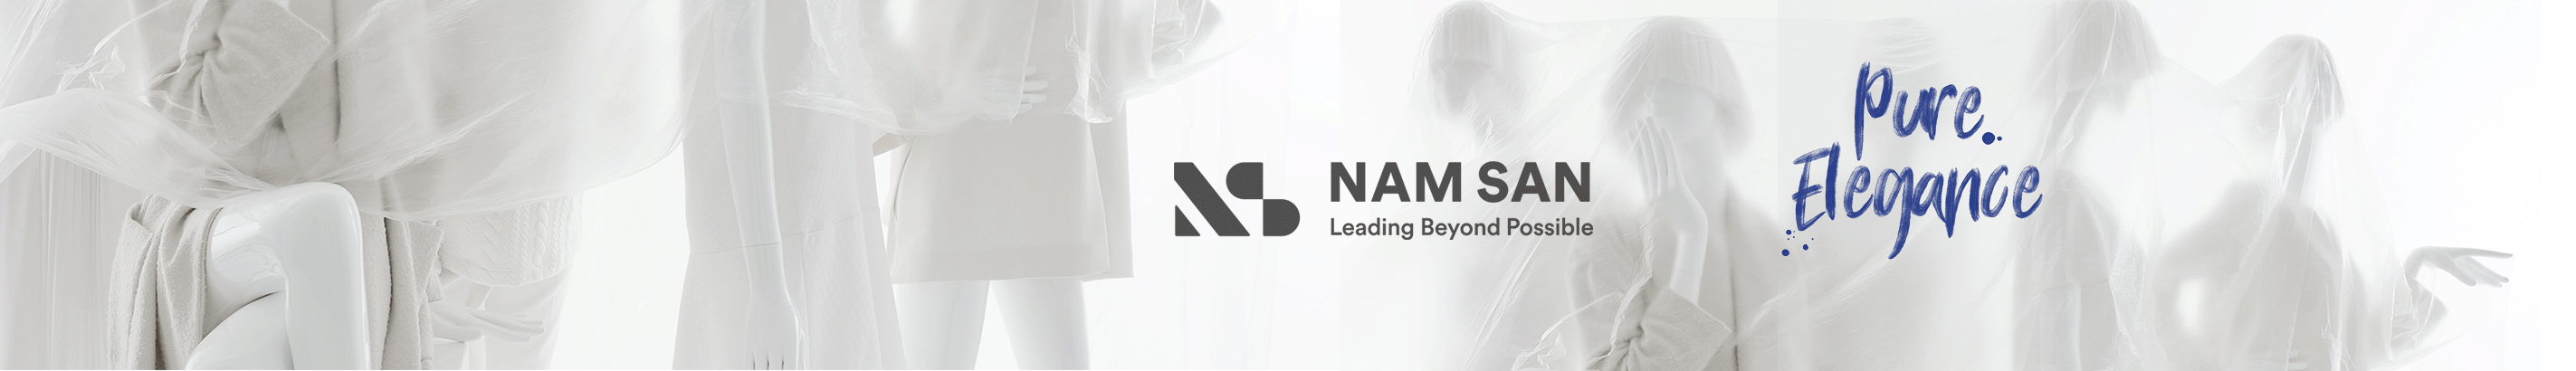 NamSan VM's profile banner